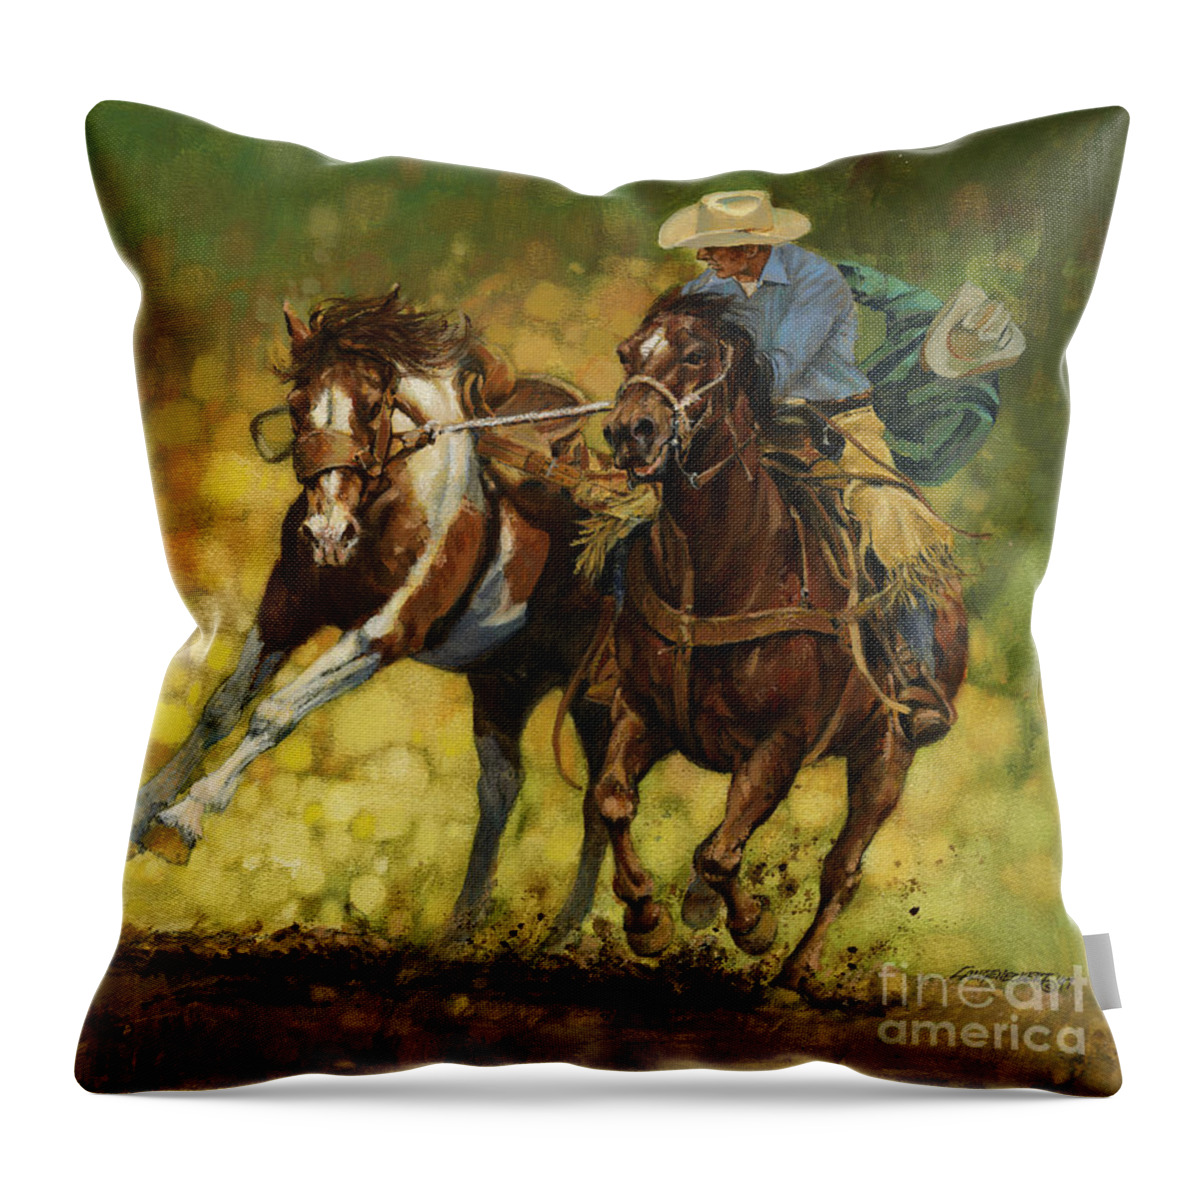 Don Langeneckert Throw Pillow featuring the painting Rodeo Pickup by Don Langeneckert